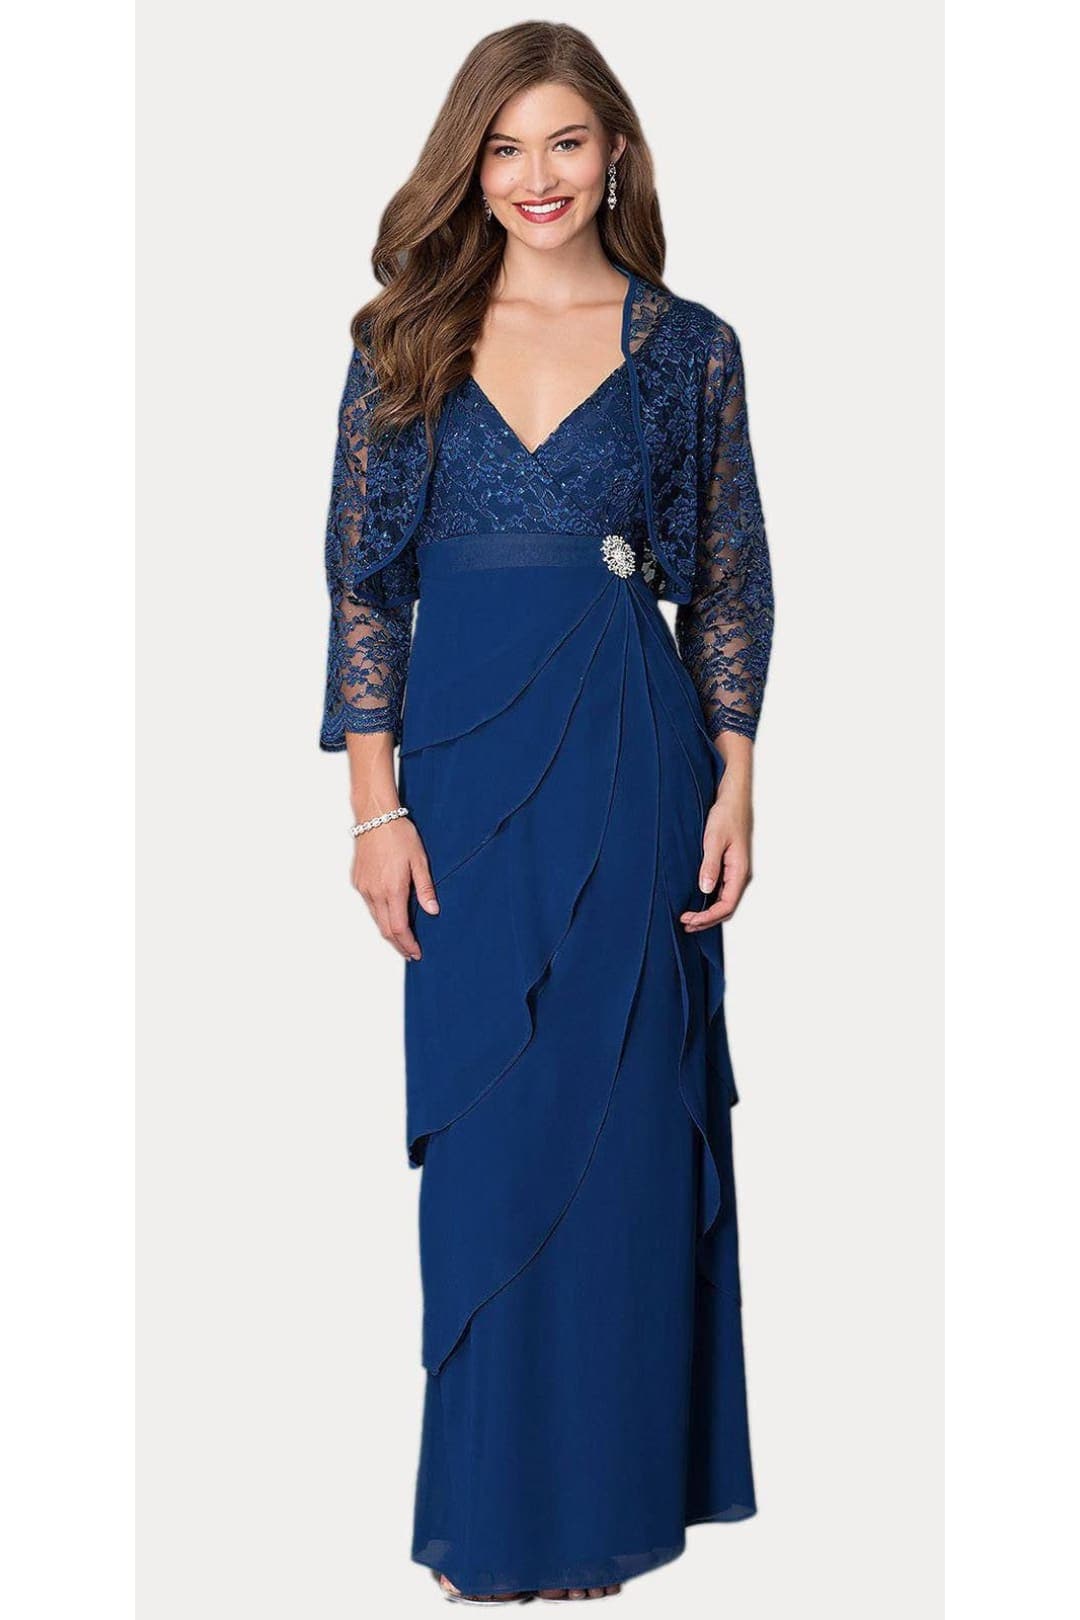 J&J Fashion 8729 Classy Mother Of The Bride Dresses - NAVY BLUE / M